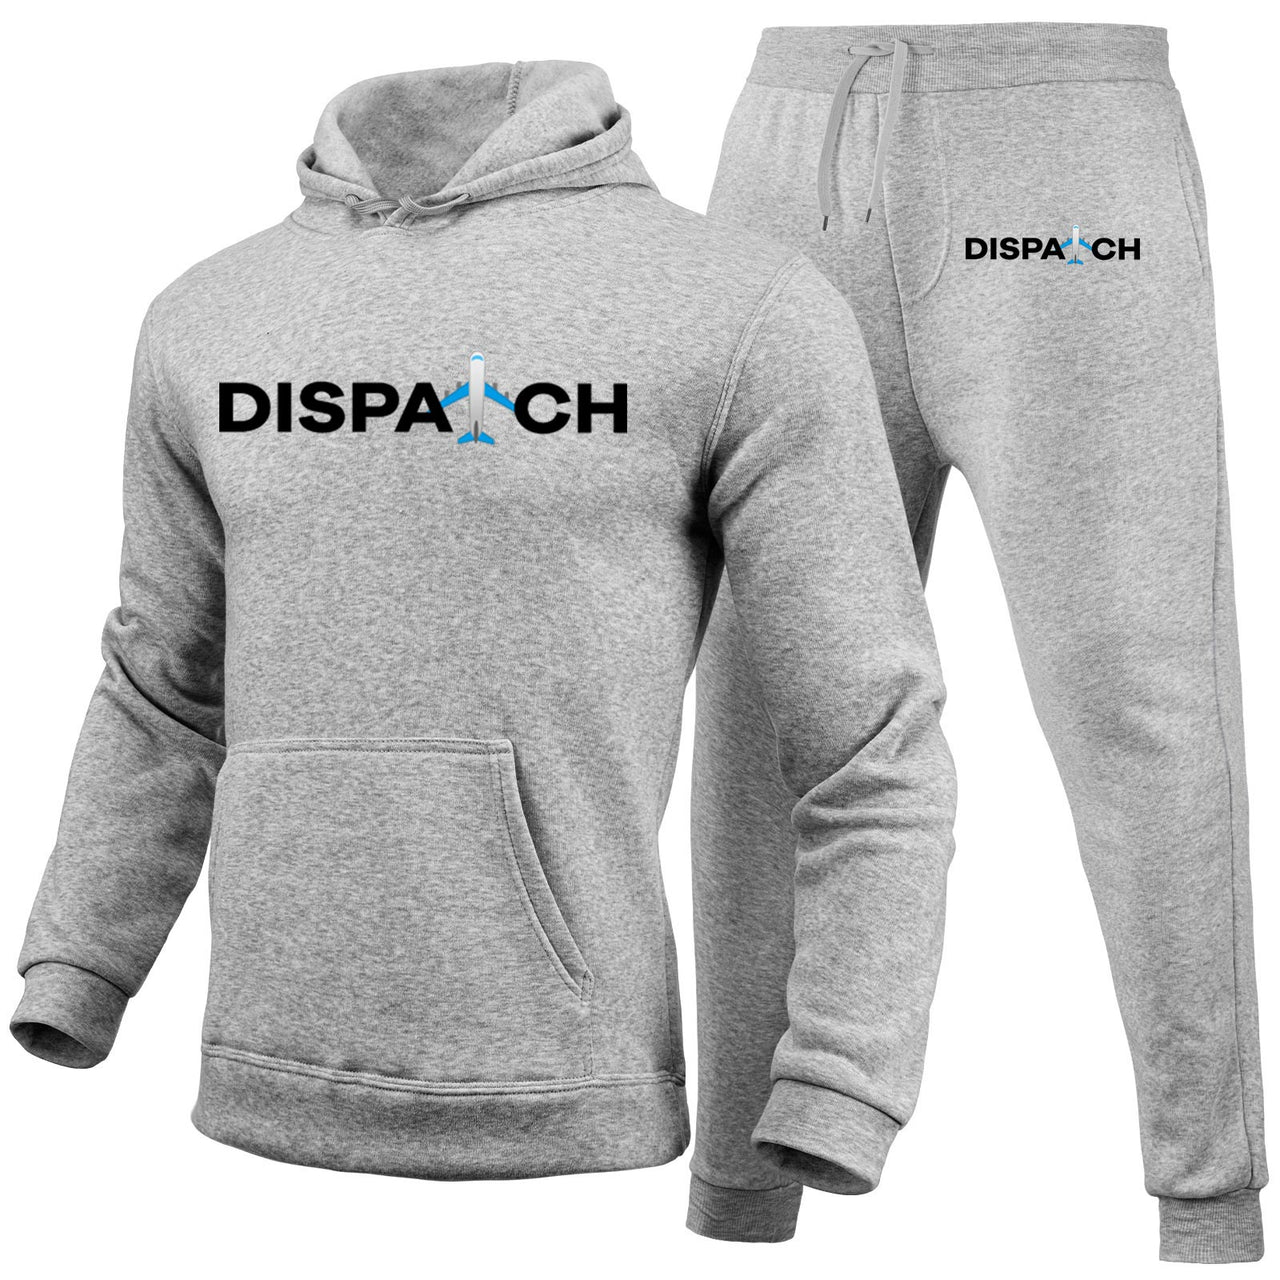 Dispatch Designed Hoodies & Sweatpants Set